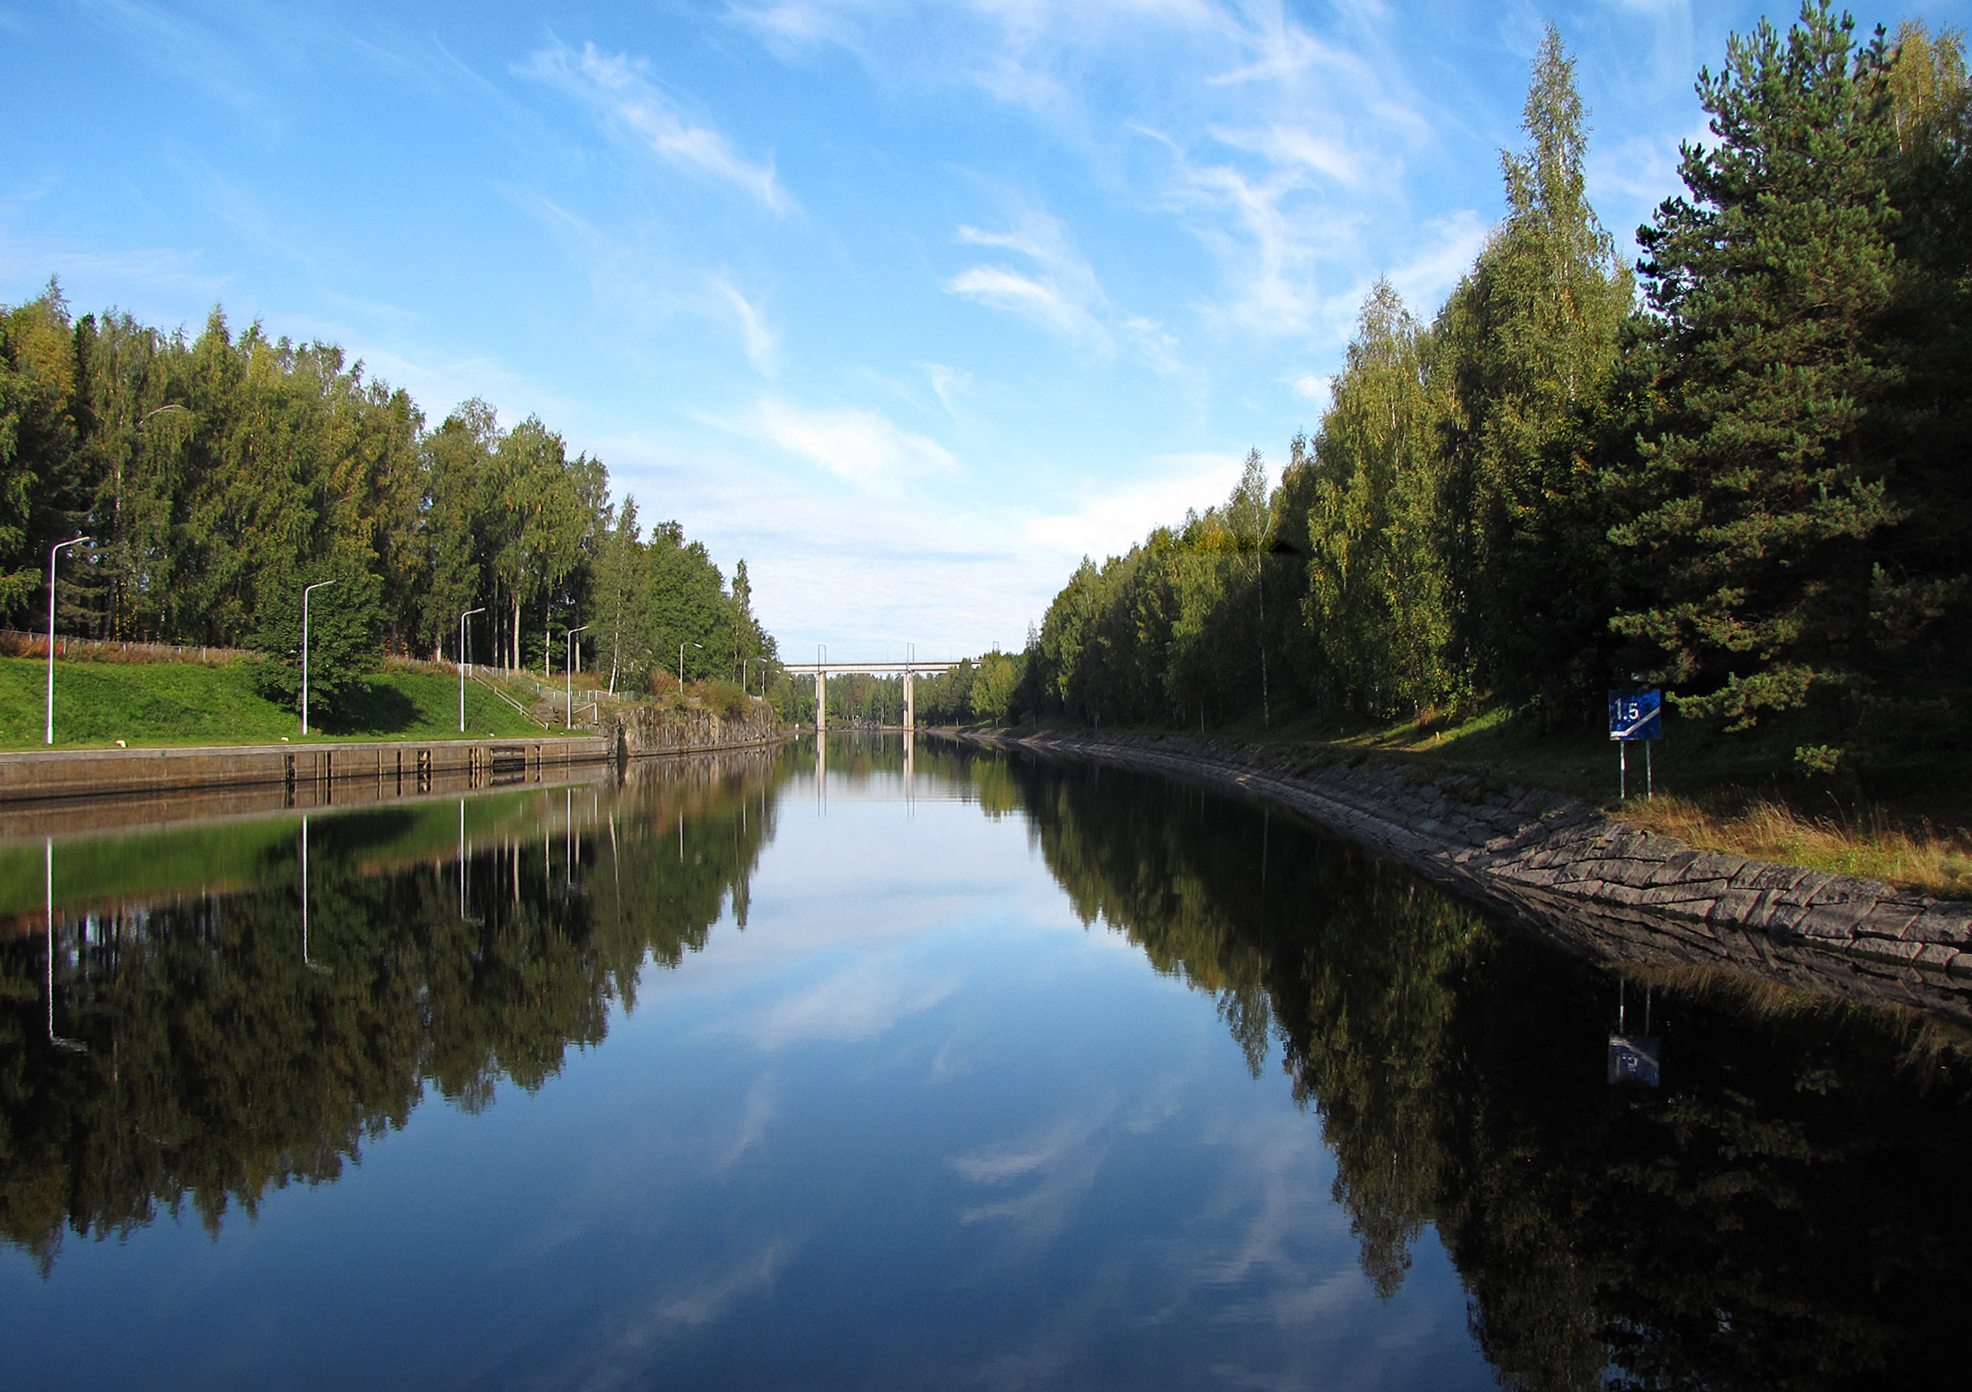 File:Saimaa canal at Lappeenranta Finland.jpg - Wikimedia Commons